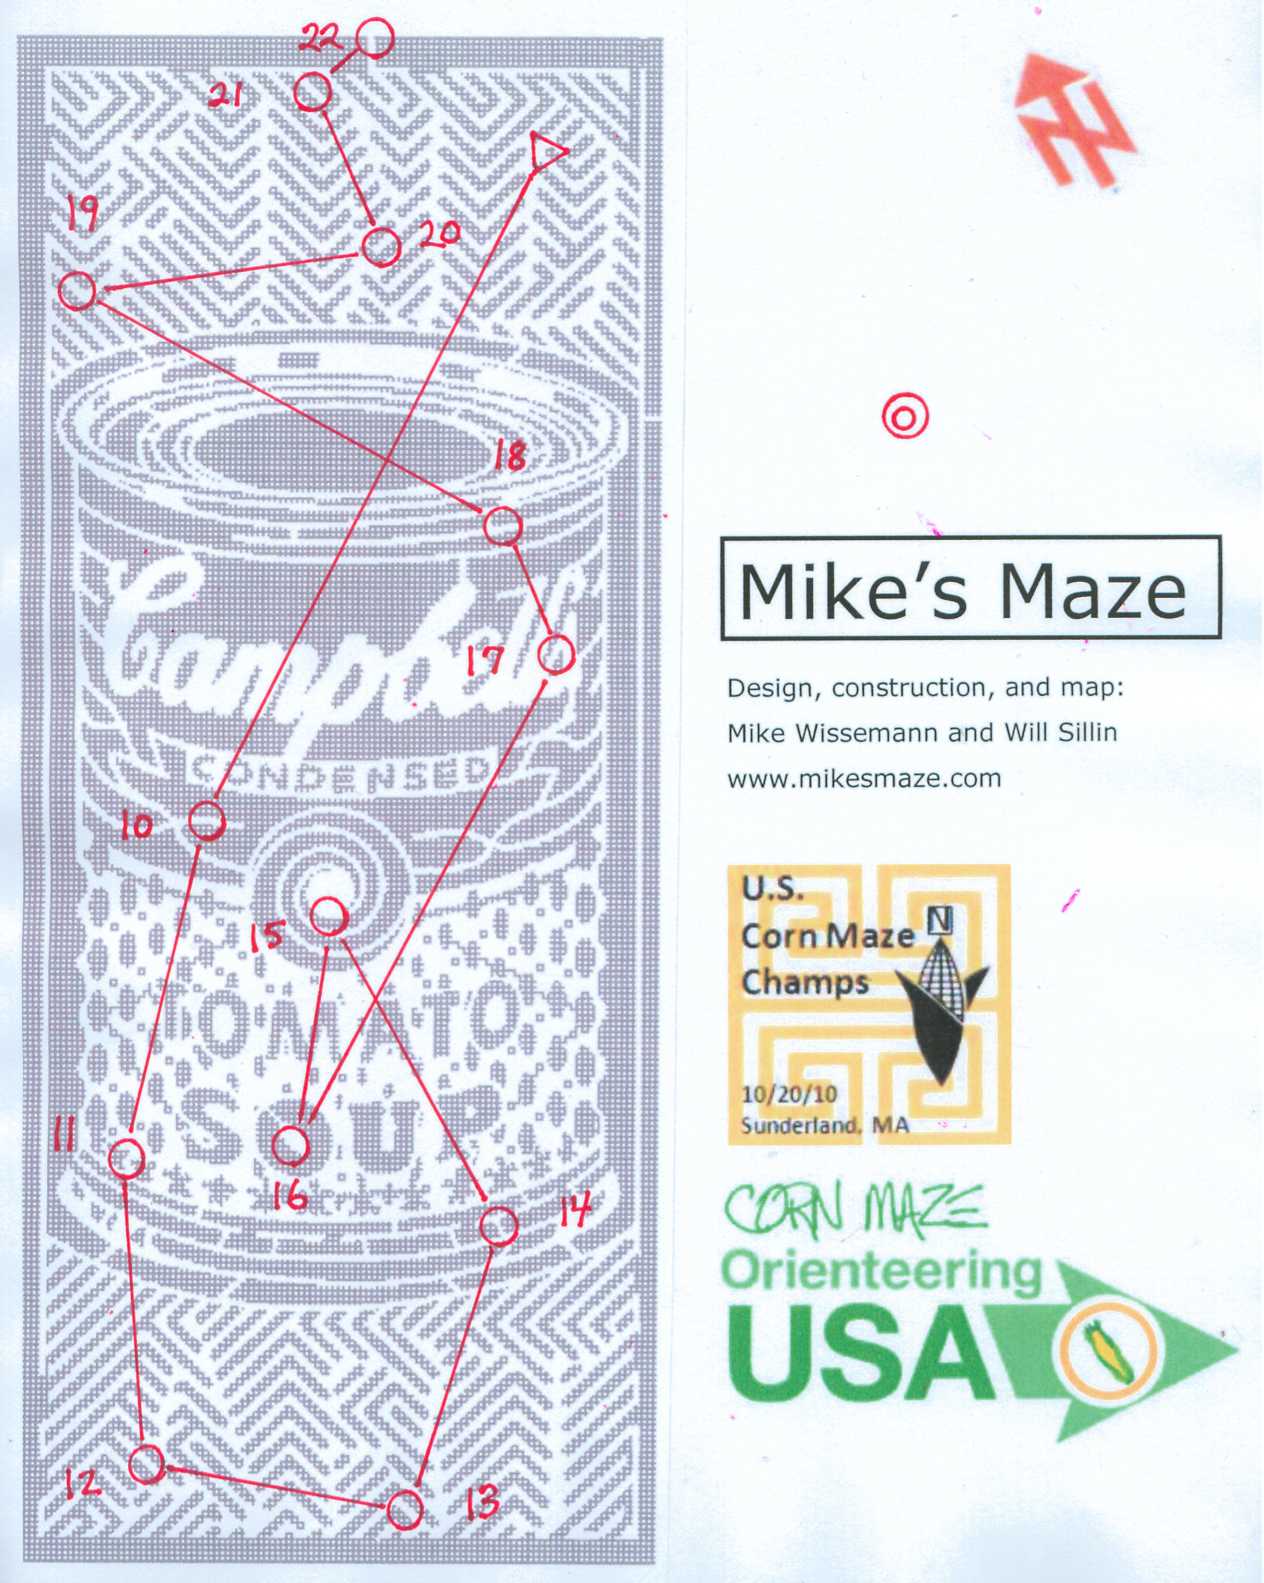 US Corn Maze Orienteering Classic Champs - Part 2 (2010-10-20)